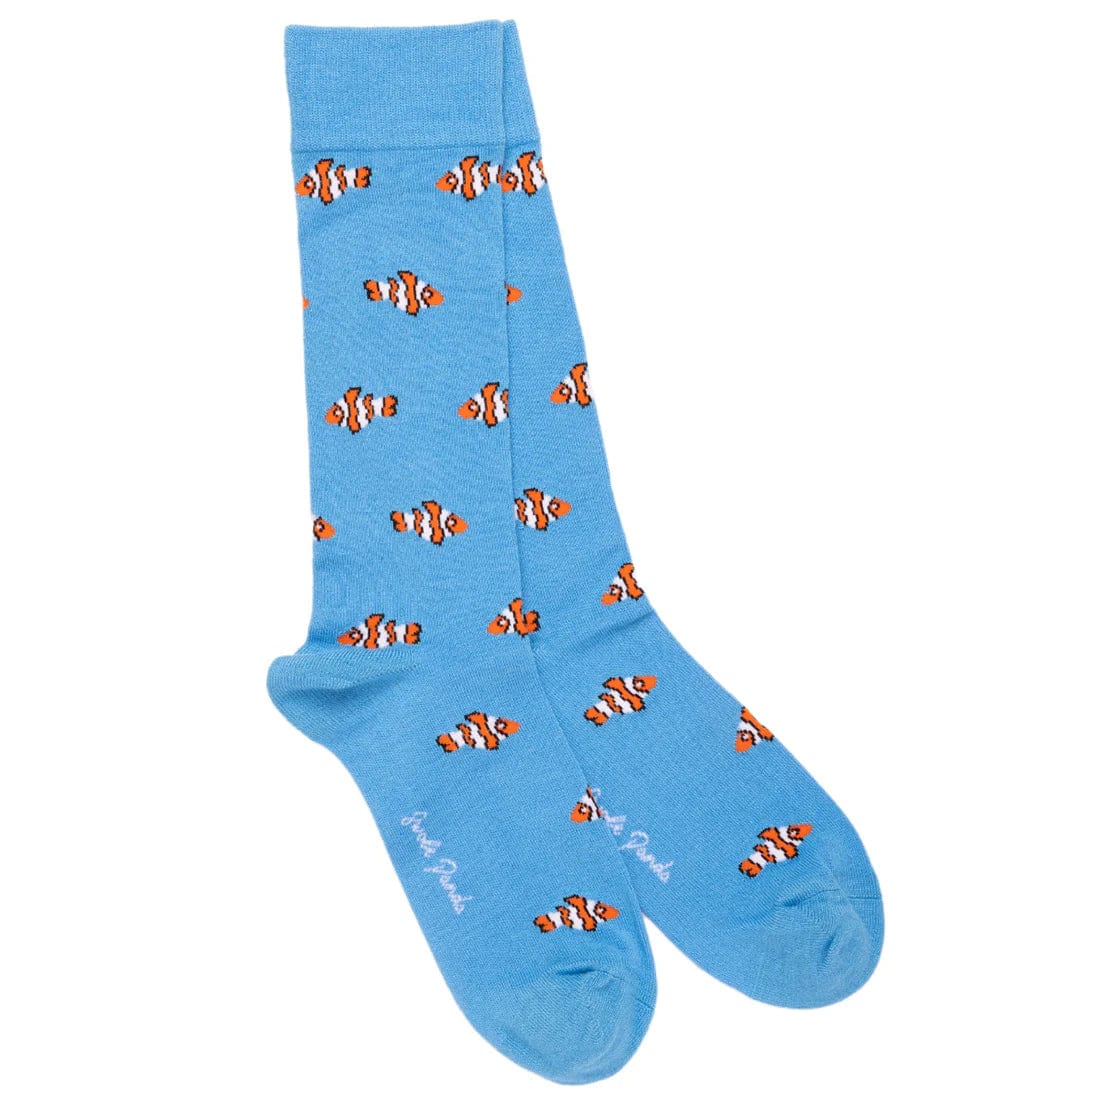 Swole Panda Gold Fish Socks in Blue